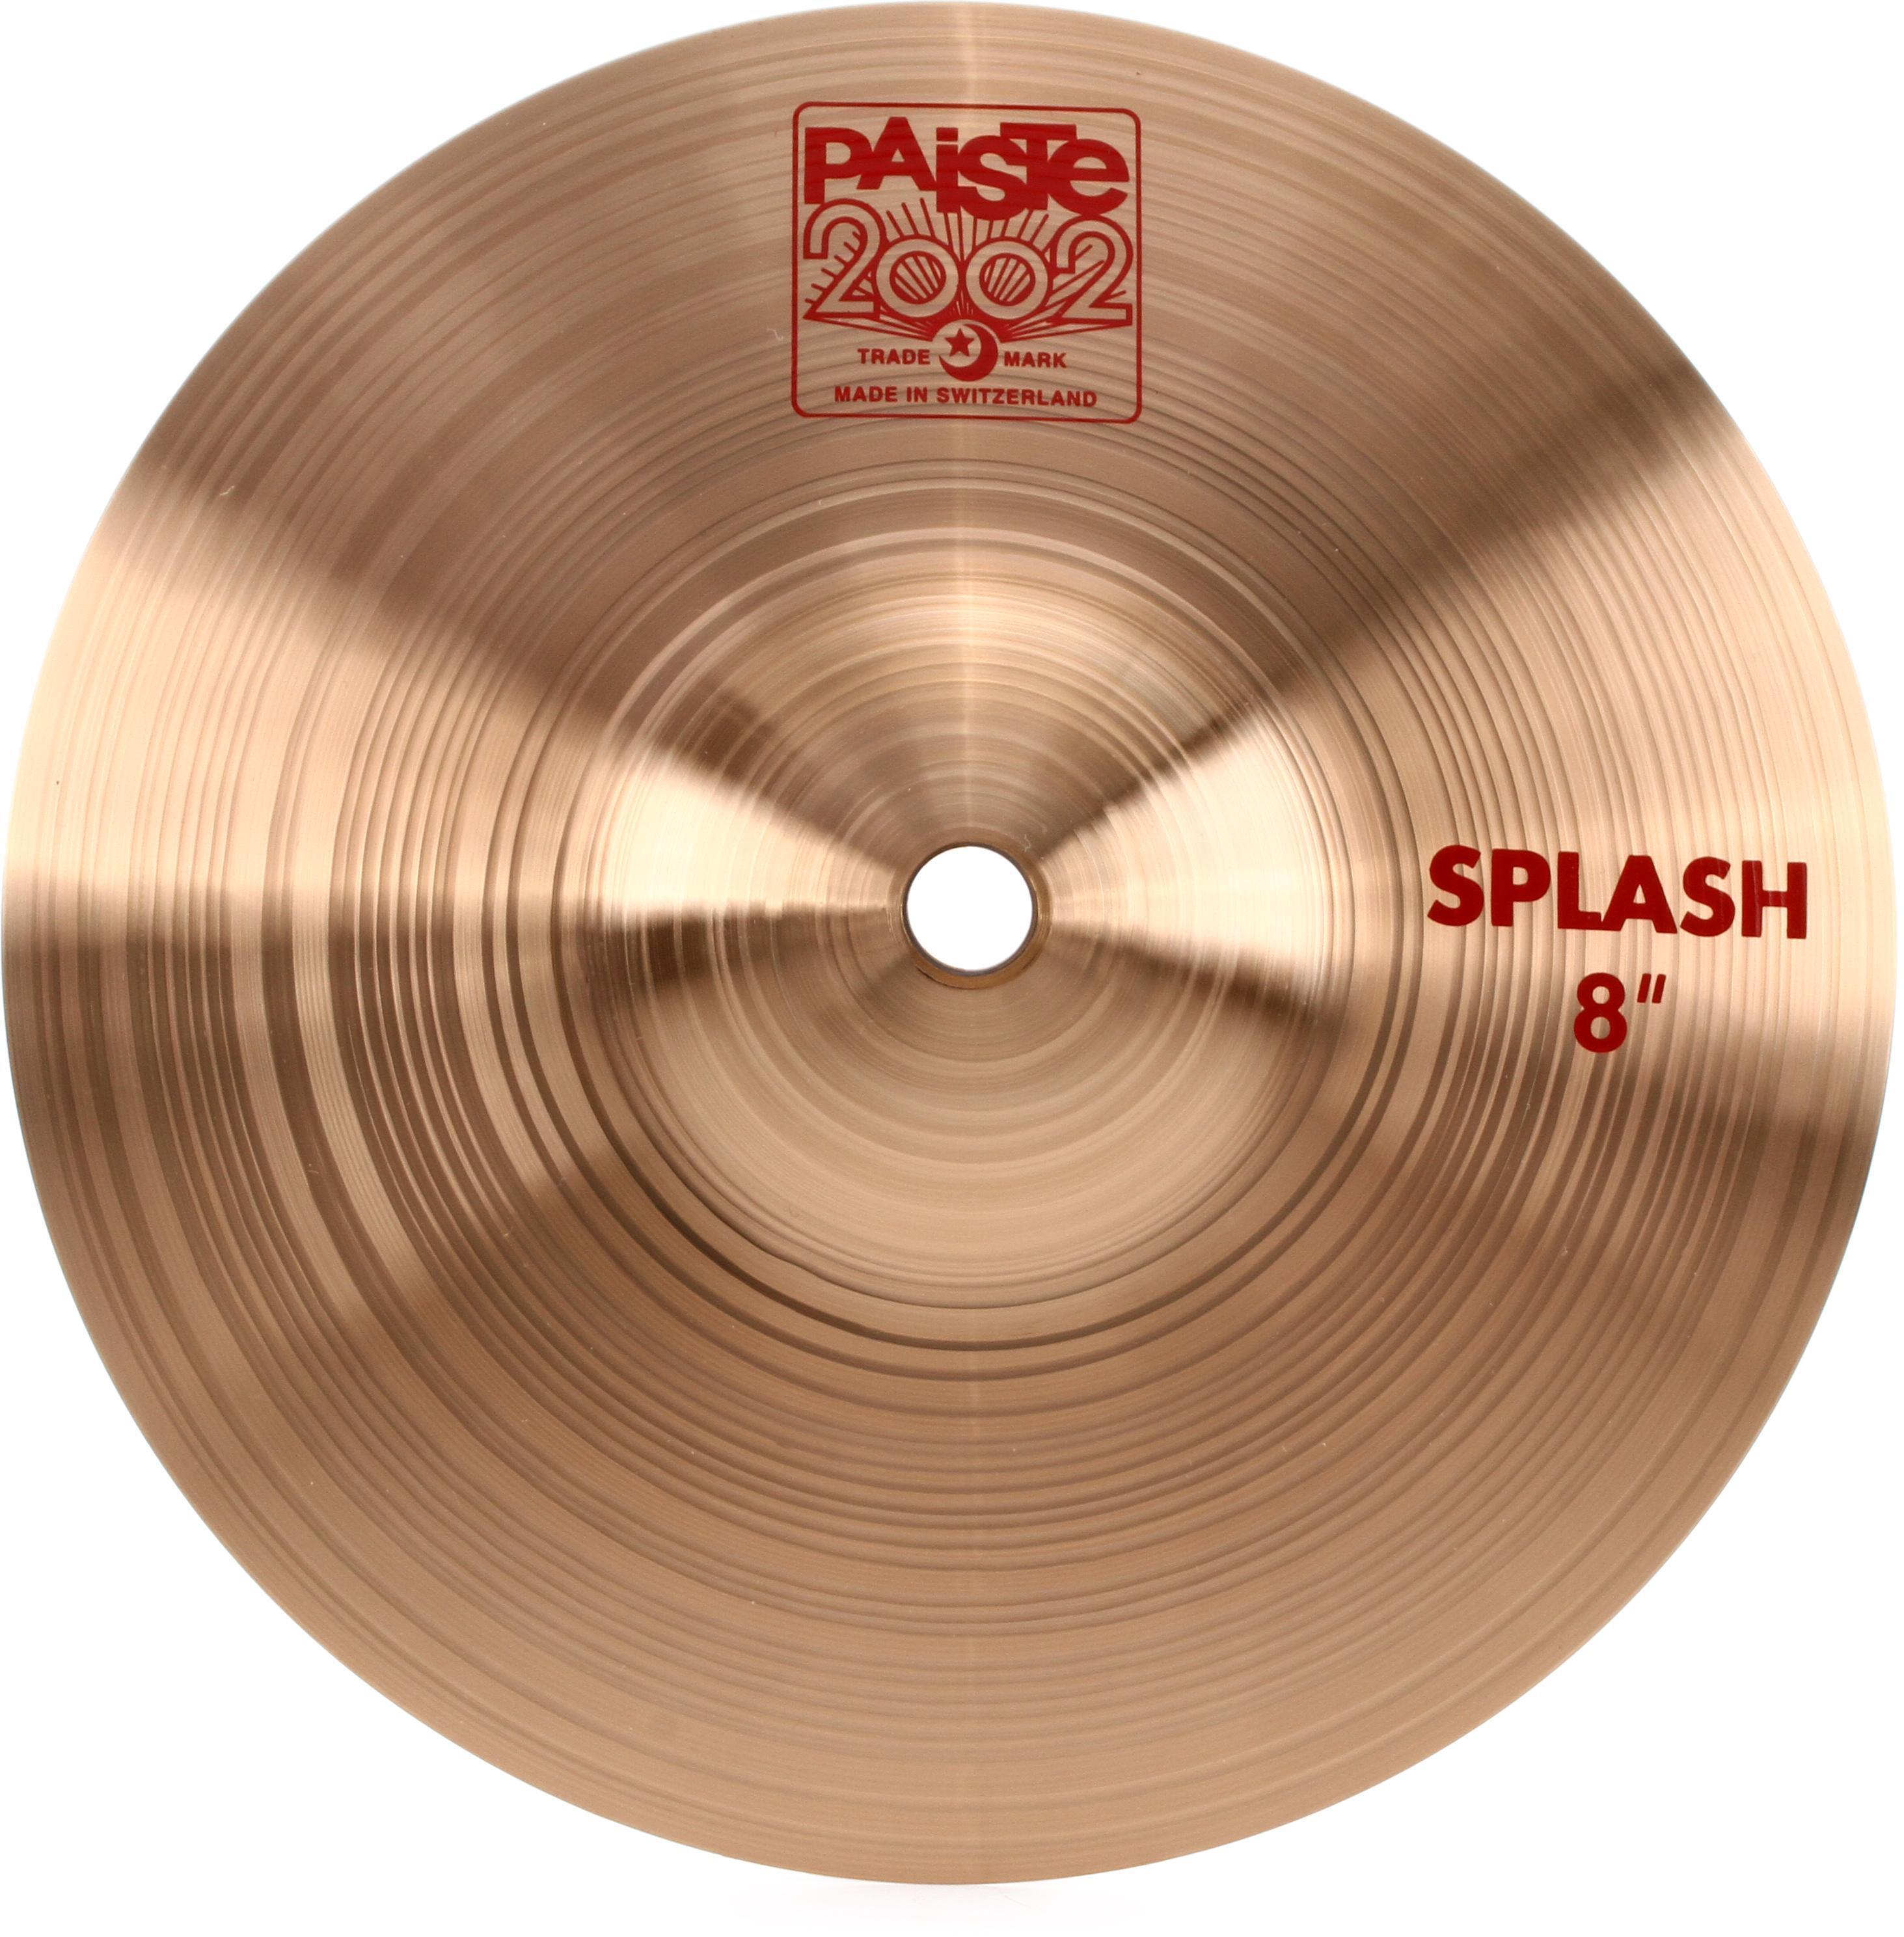 Paiste 8 inch 2002 Splash Cymbal | Sweetwater